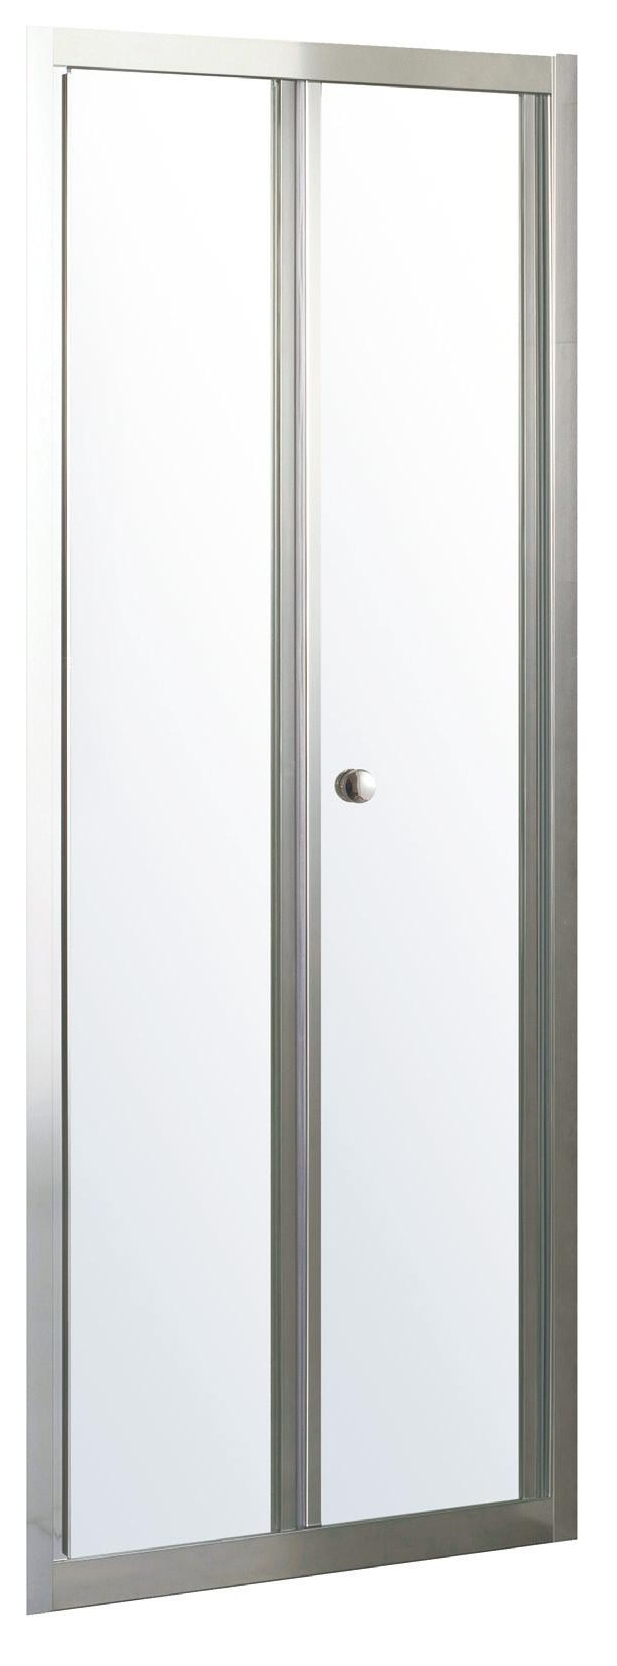 Двері душової кабіни Eger Bifold 599-163-80(h) 80x195